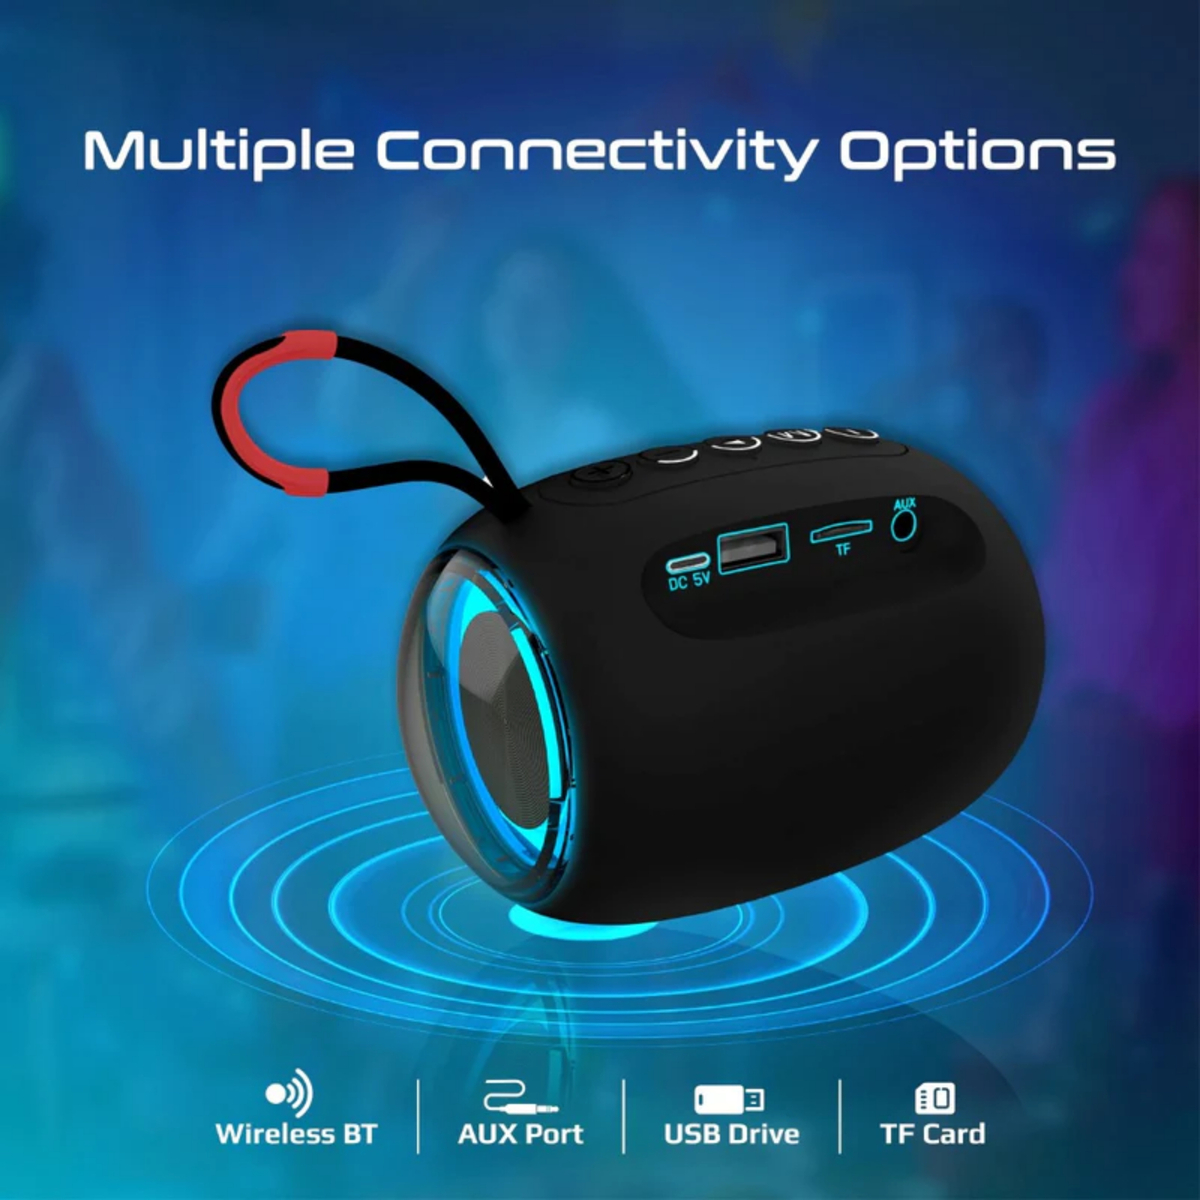 Promate High-Definition Wireless Bluetooth Speaker, Capsule-3, Black